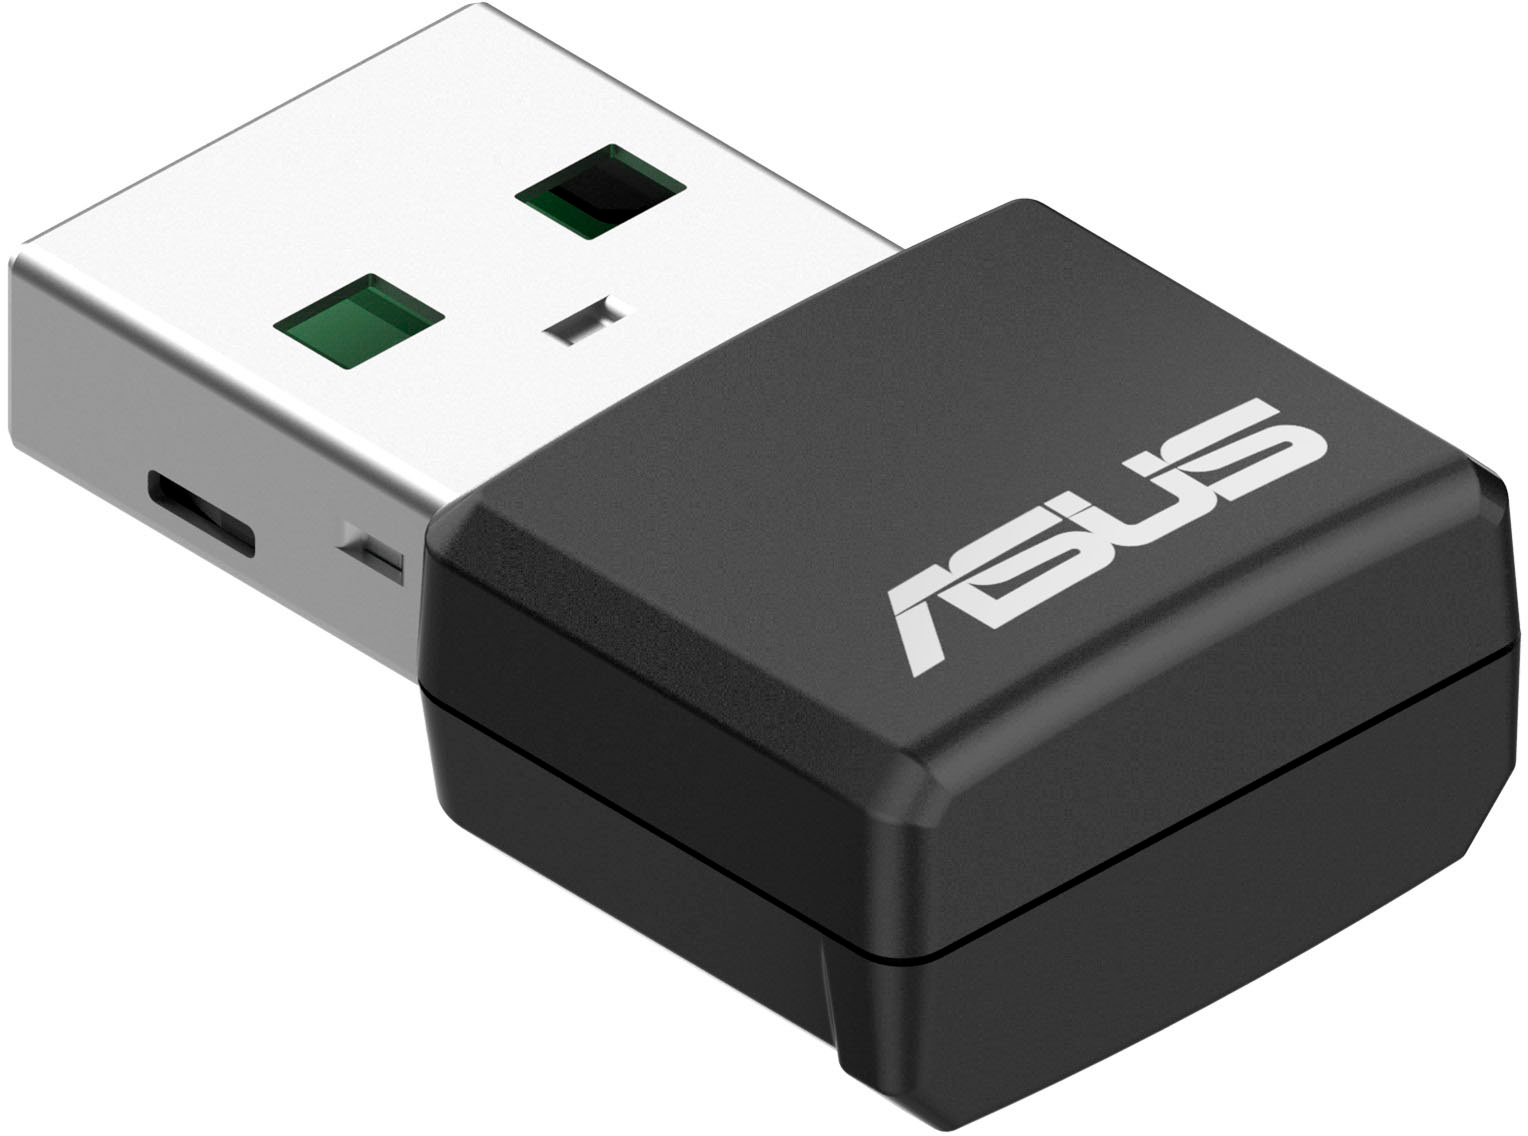 ASUS WiFi 6 AX1800 USB WiFi-adapter (USB-AX56) – Dual Band WiFi 6